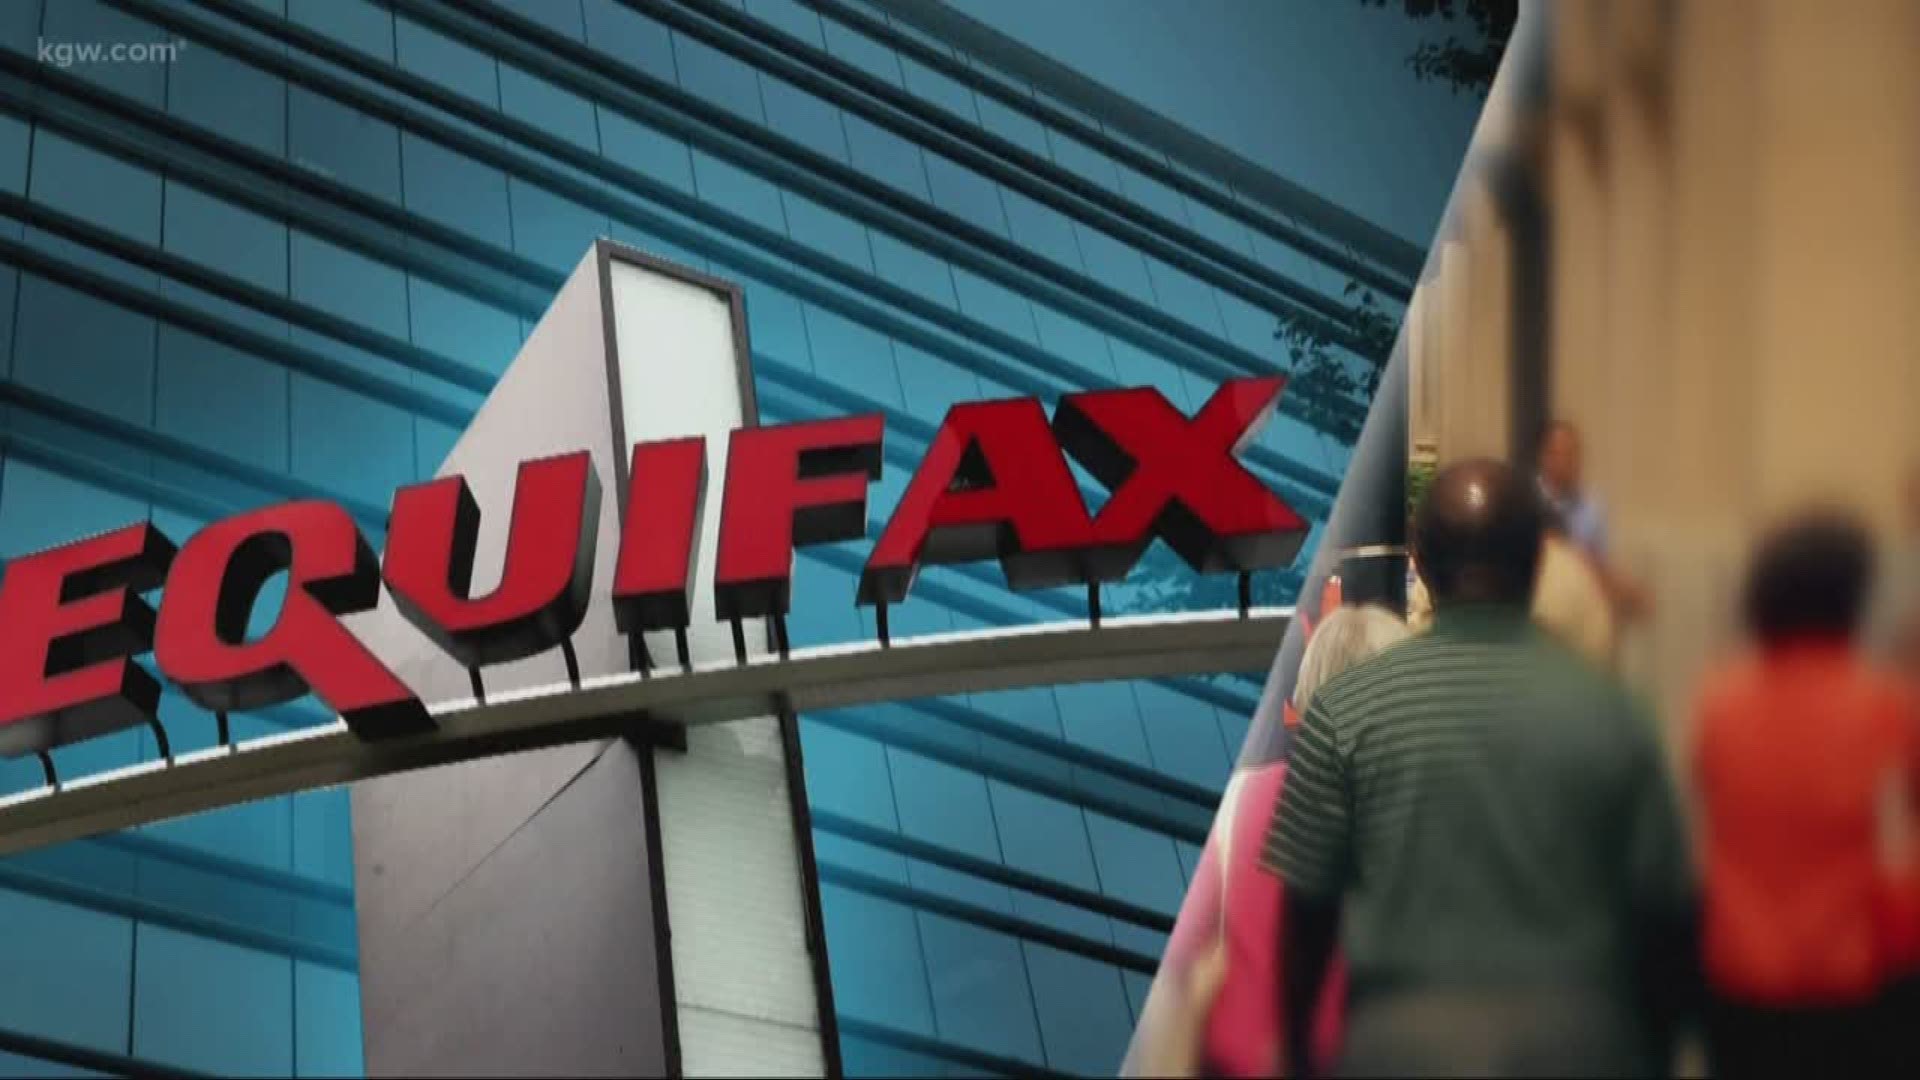 Oregon receives $2.8M in Equifax data breach settlement